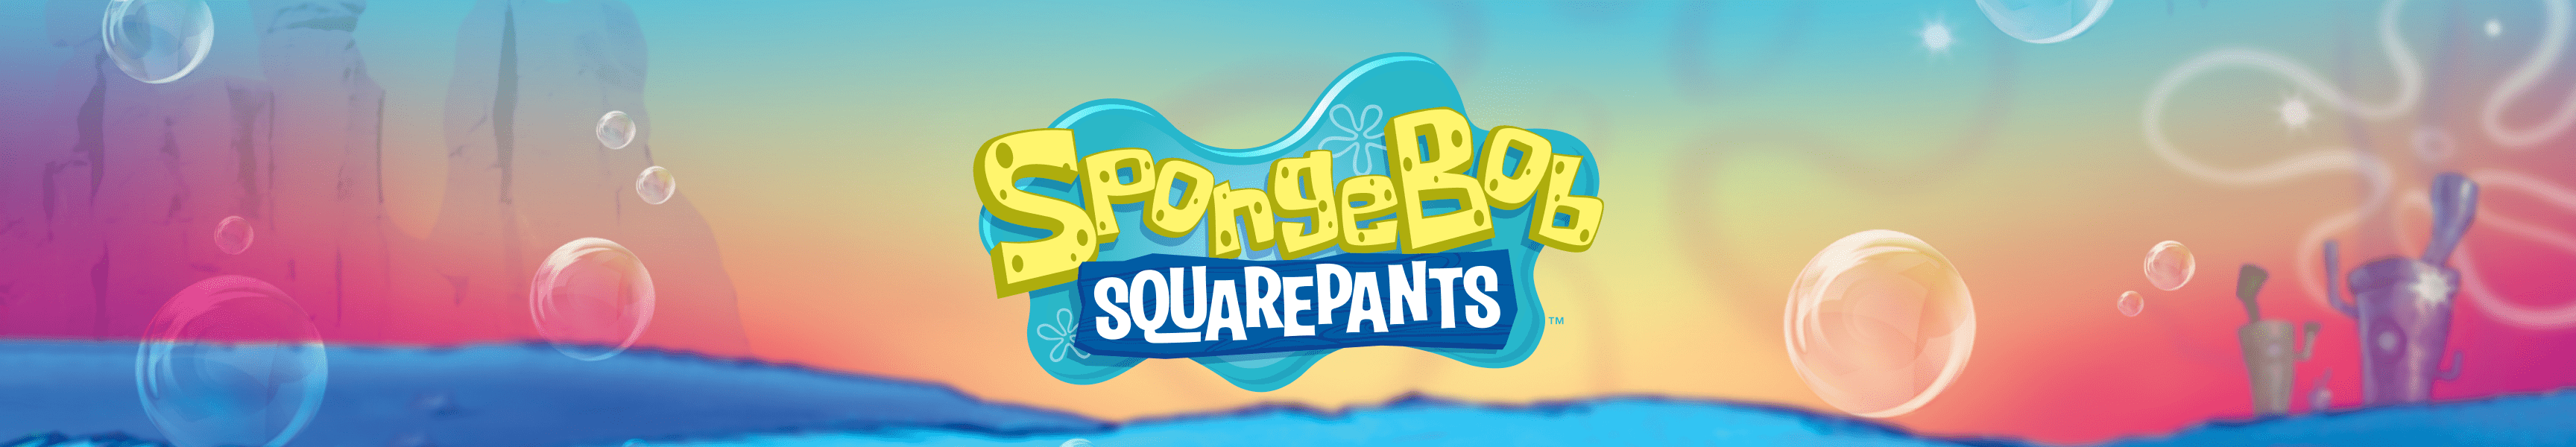 SpongeBob SquarePants Clothing